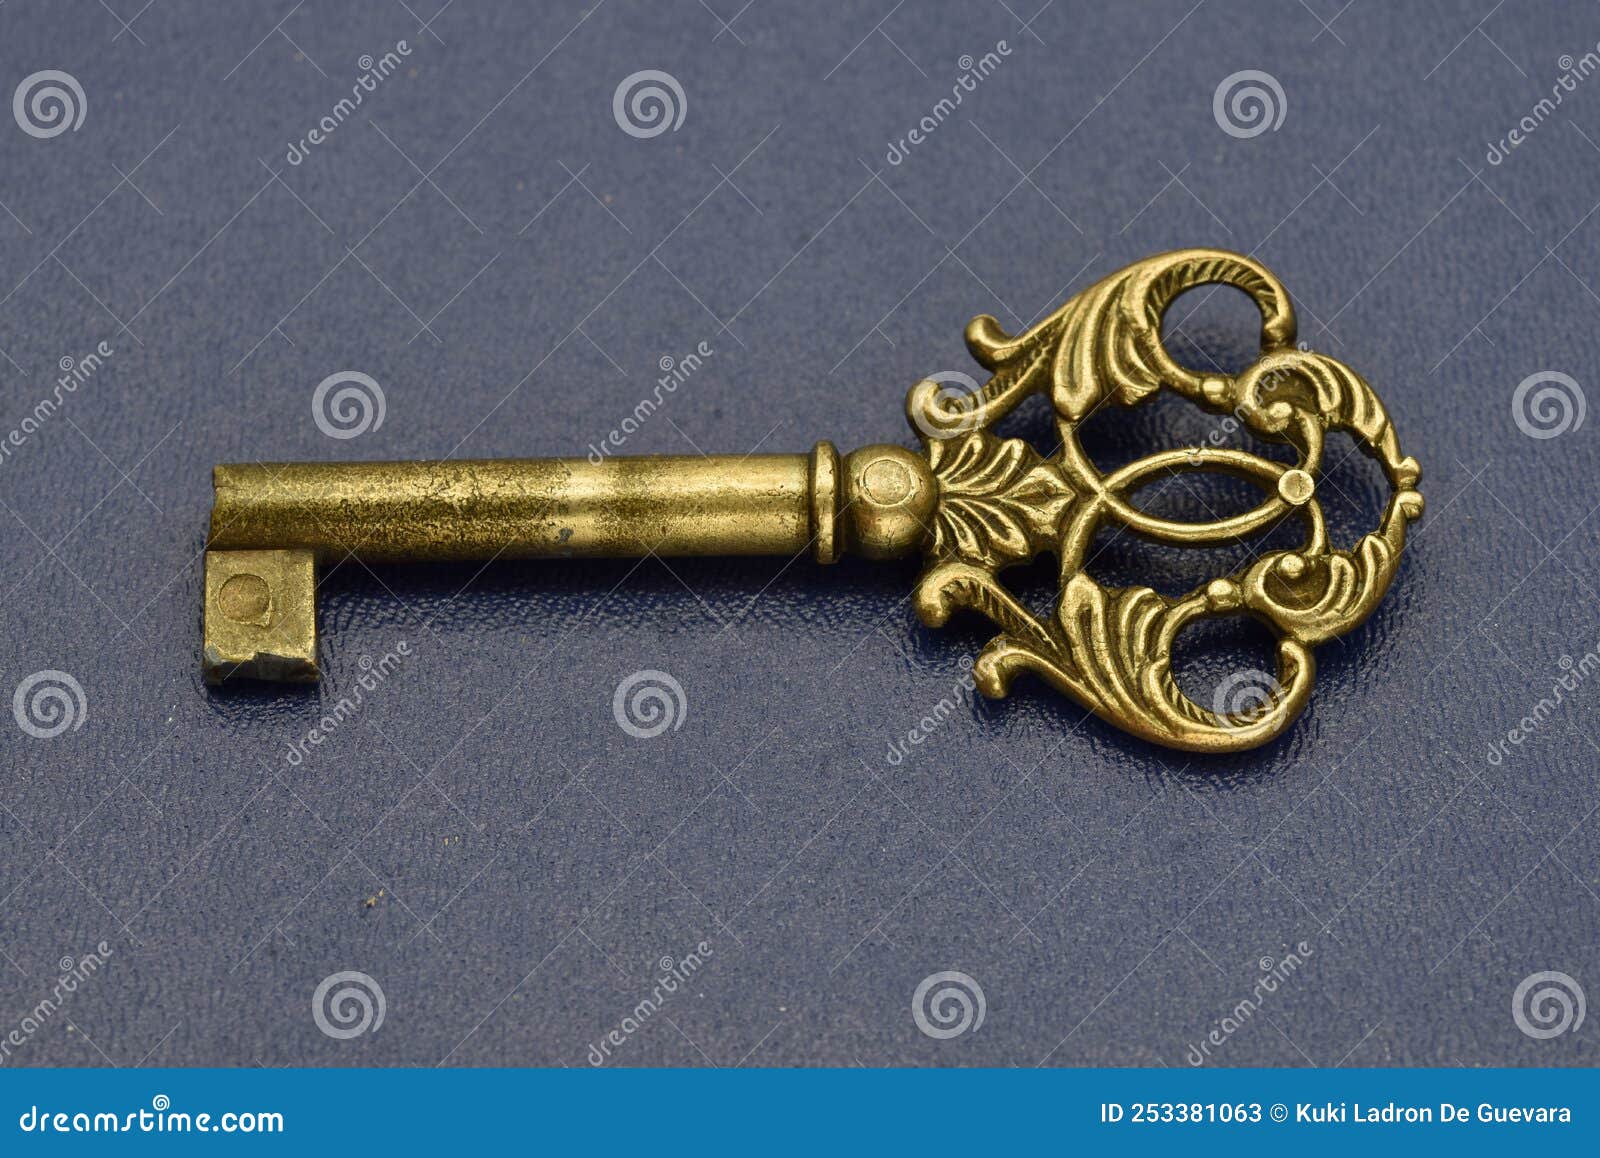 old key on blue background